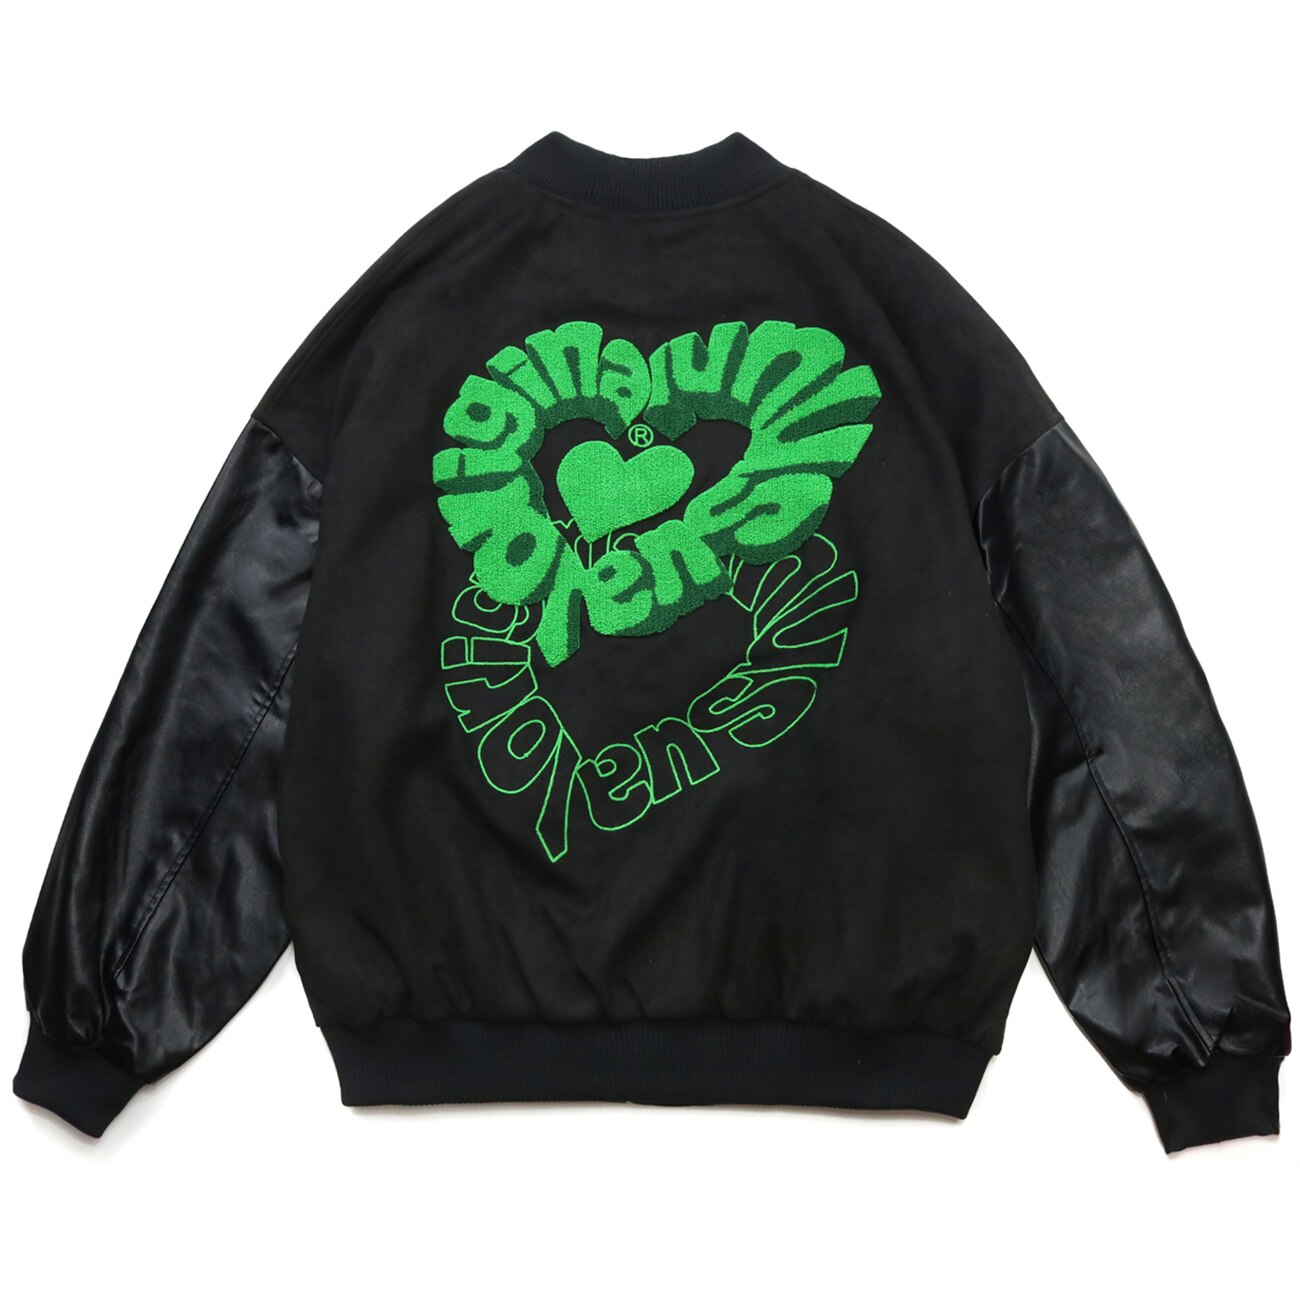 Eprezzy® - Green Heart Embroidered Jacket Streetwear Fashion - eprezzy.com